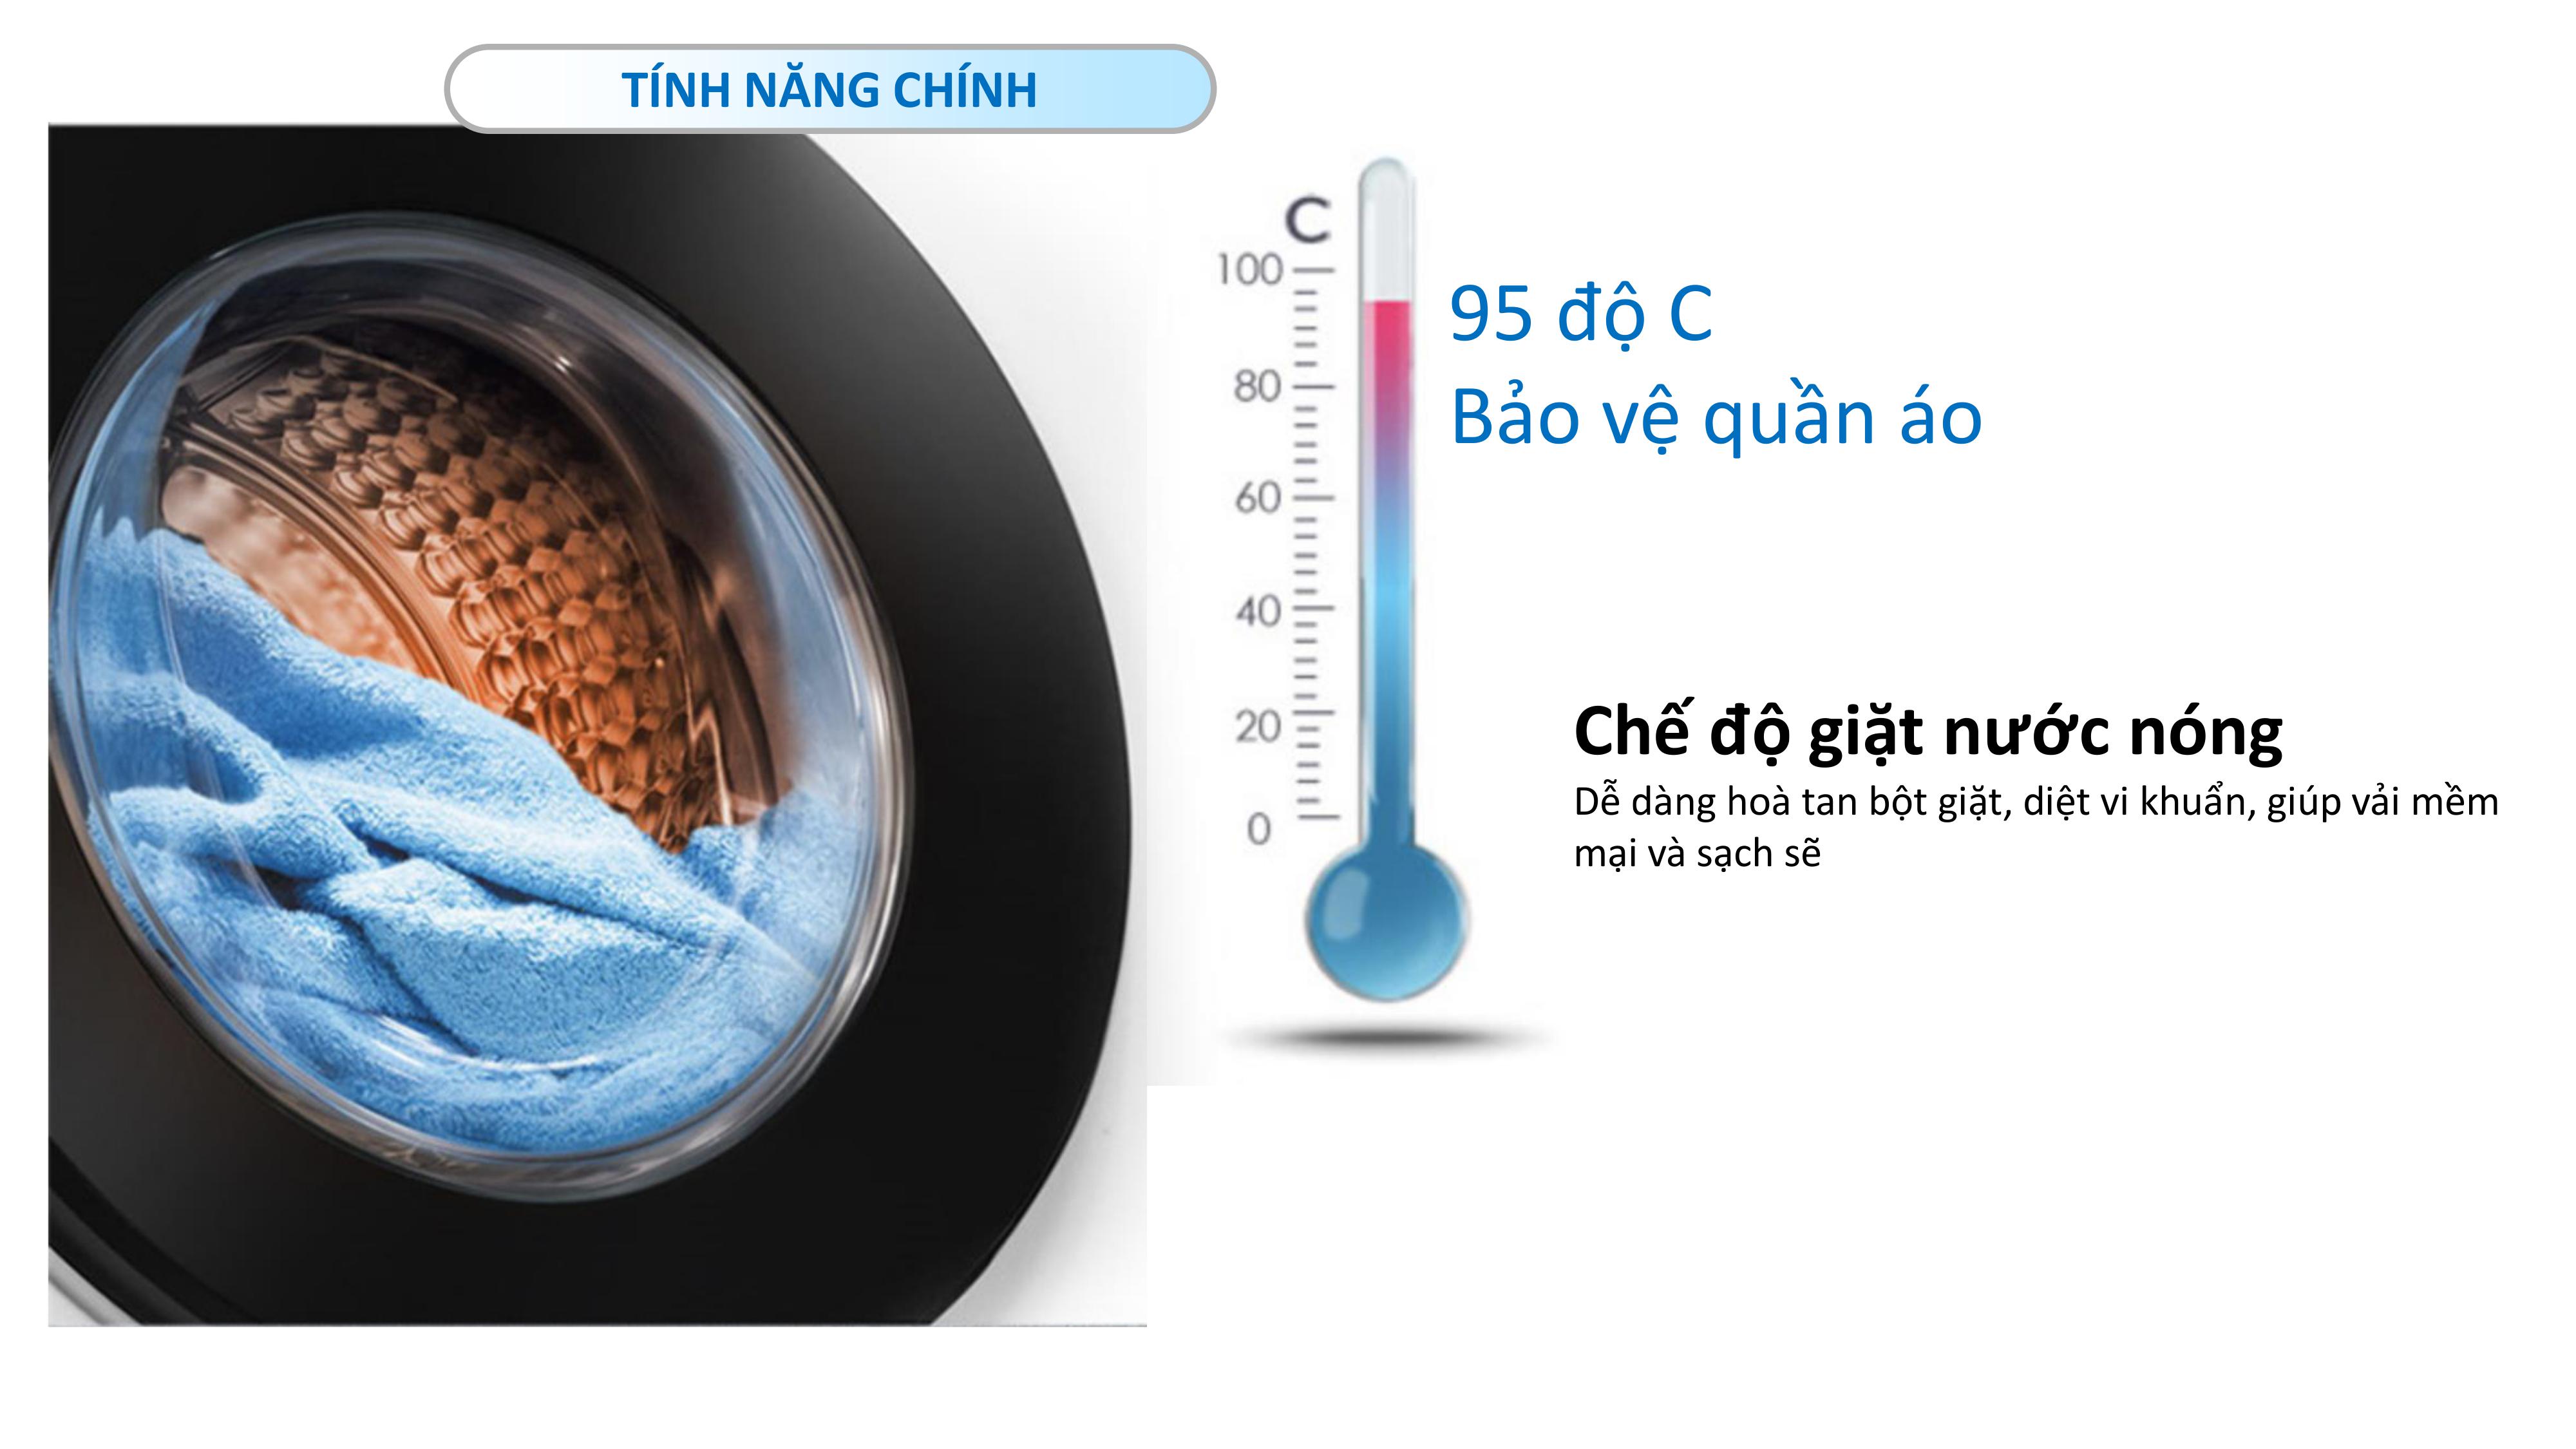 TCL washing-machine k08 Hot water